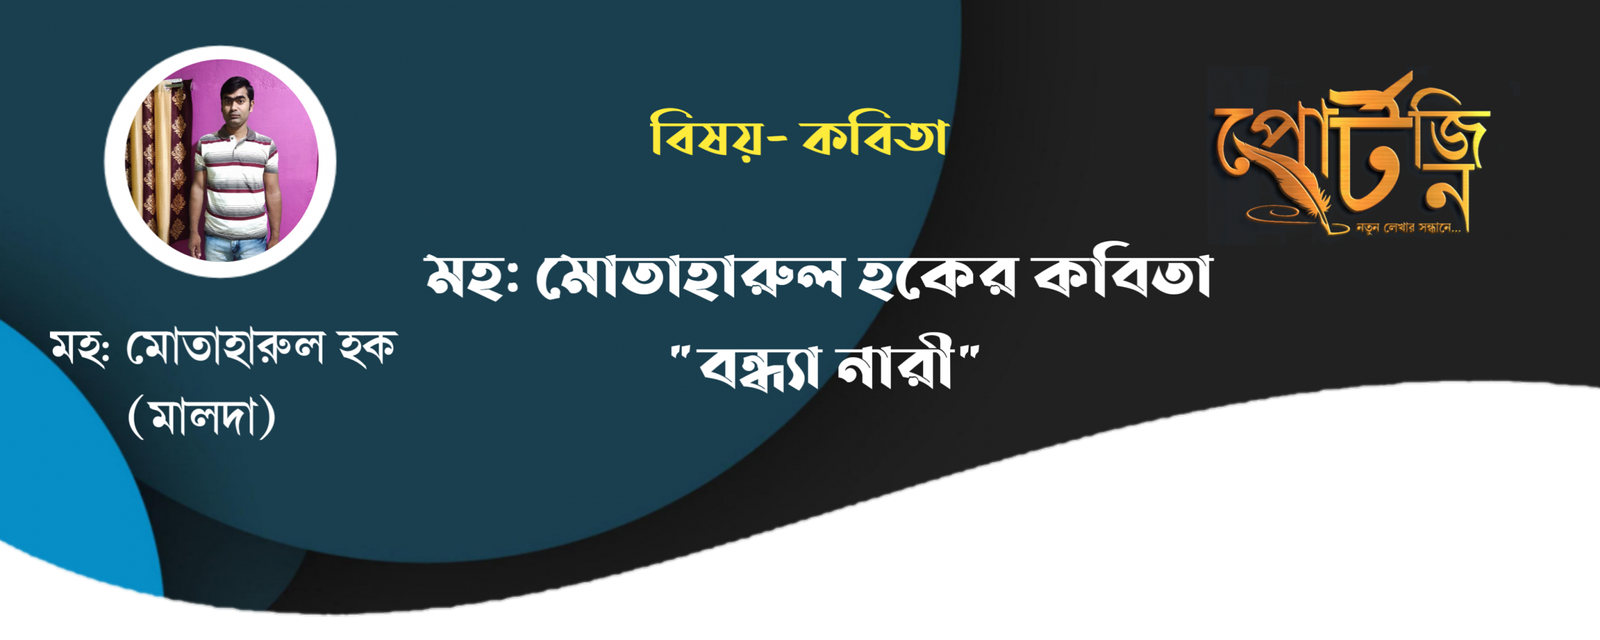 sunday online bengali literature